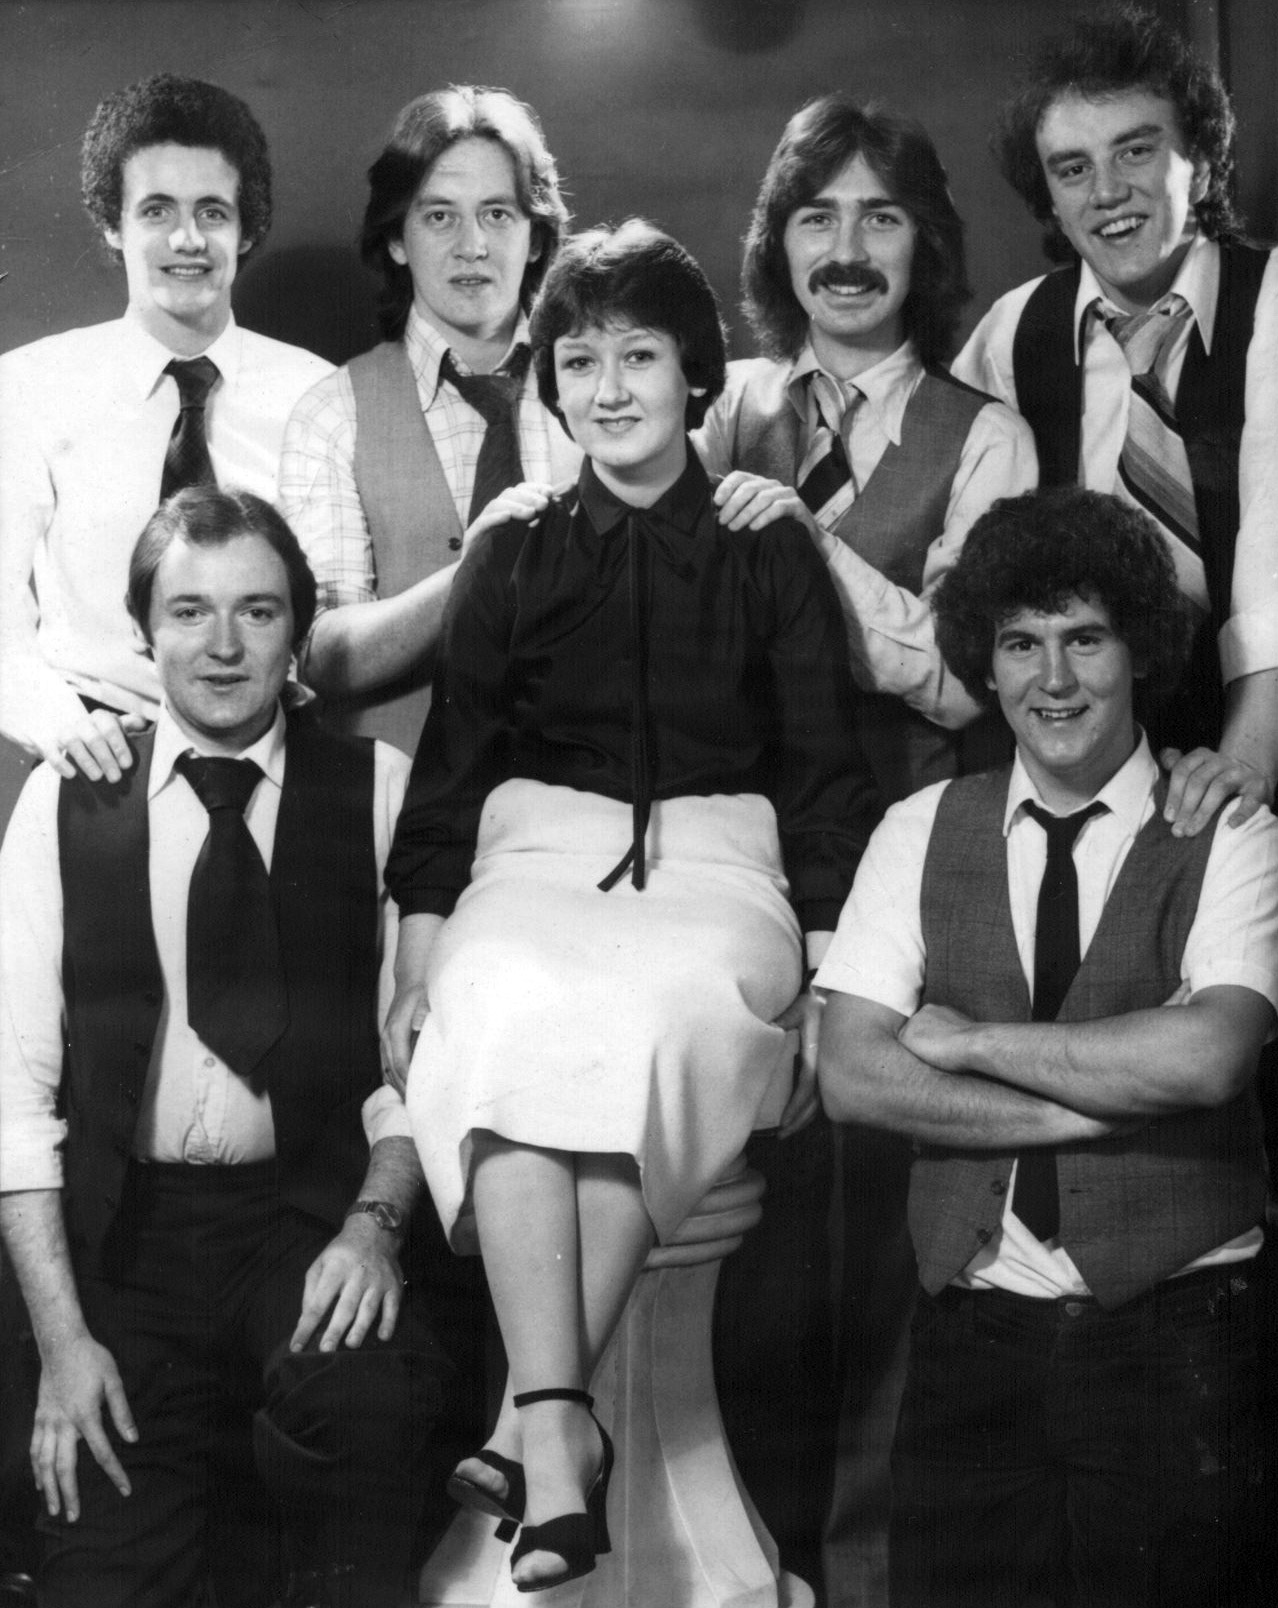 The Livin’ Thing 40 years ago 1979: Back row: Conor McHugh, Seamy Cassidy, Jim Hughes, Roy Cassidy. Front row: Tom Morgan, Angela Hayes, John McKavanagh